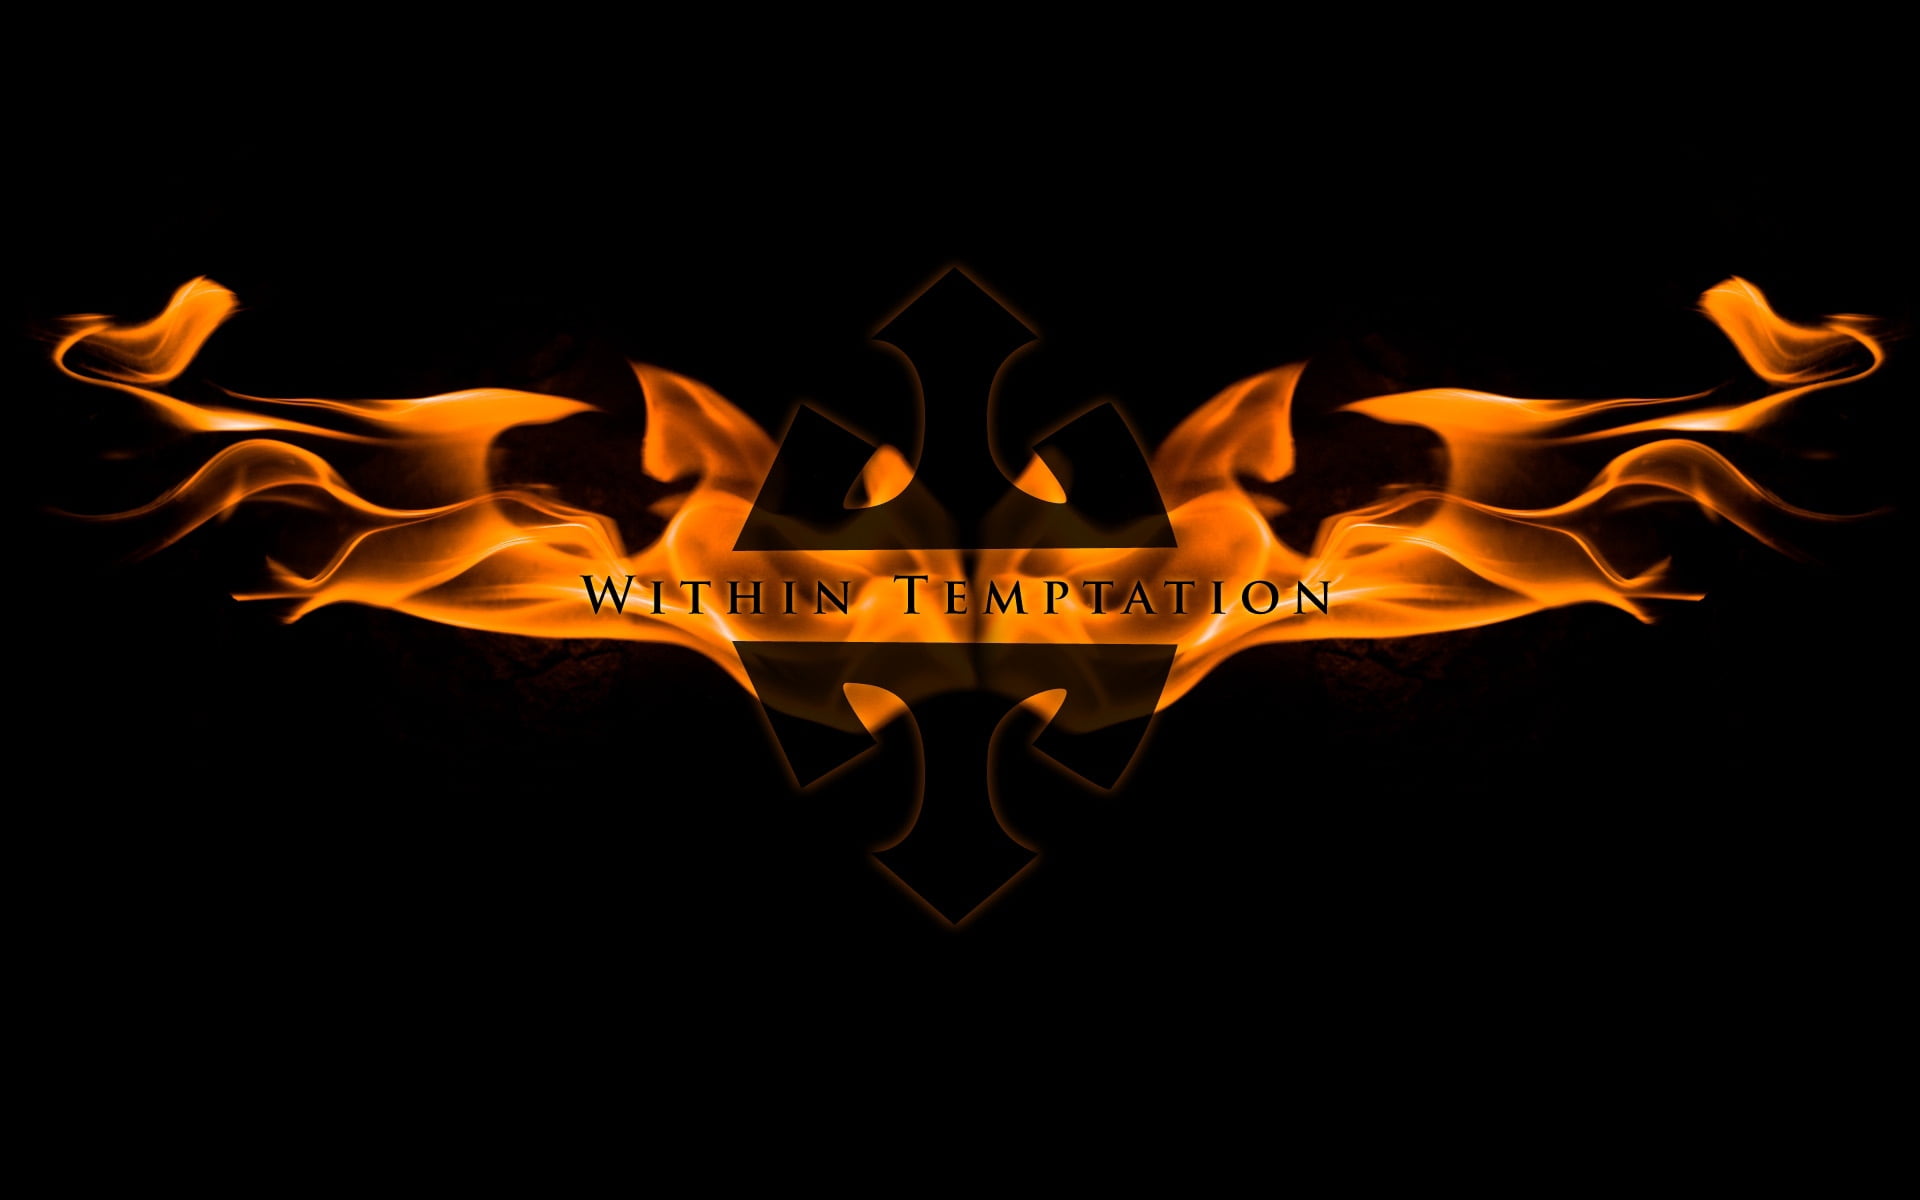 Within Temptation logo, name, fire, symbol, background, fire - Natural Phenomenon